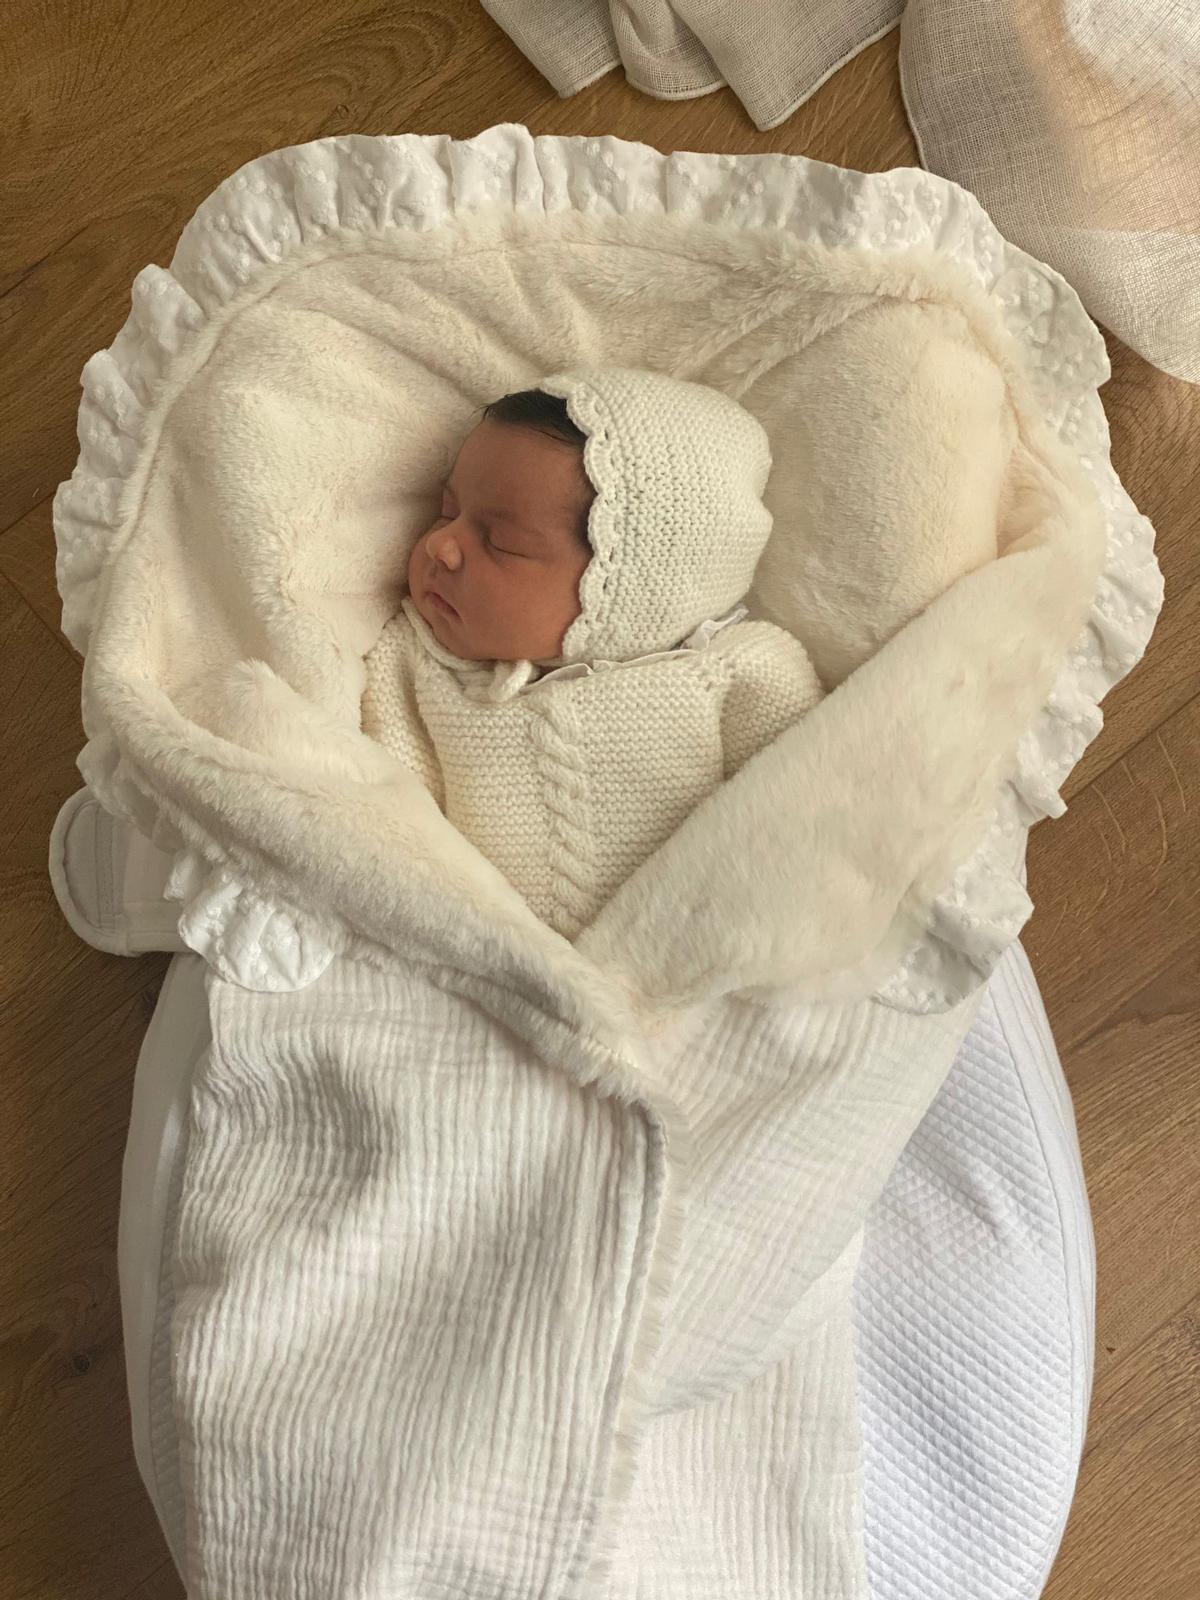 Arrullos y mantas new born - Packs hospital bebé 